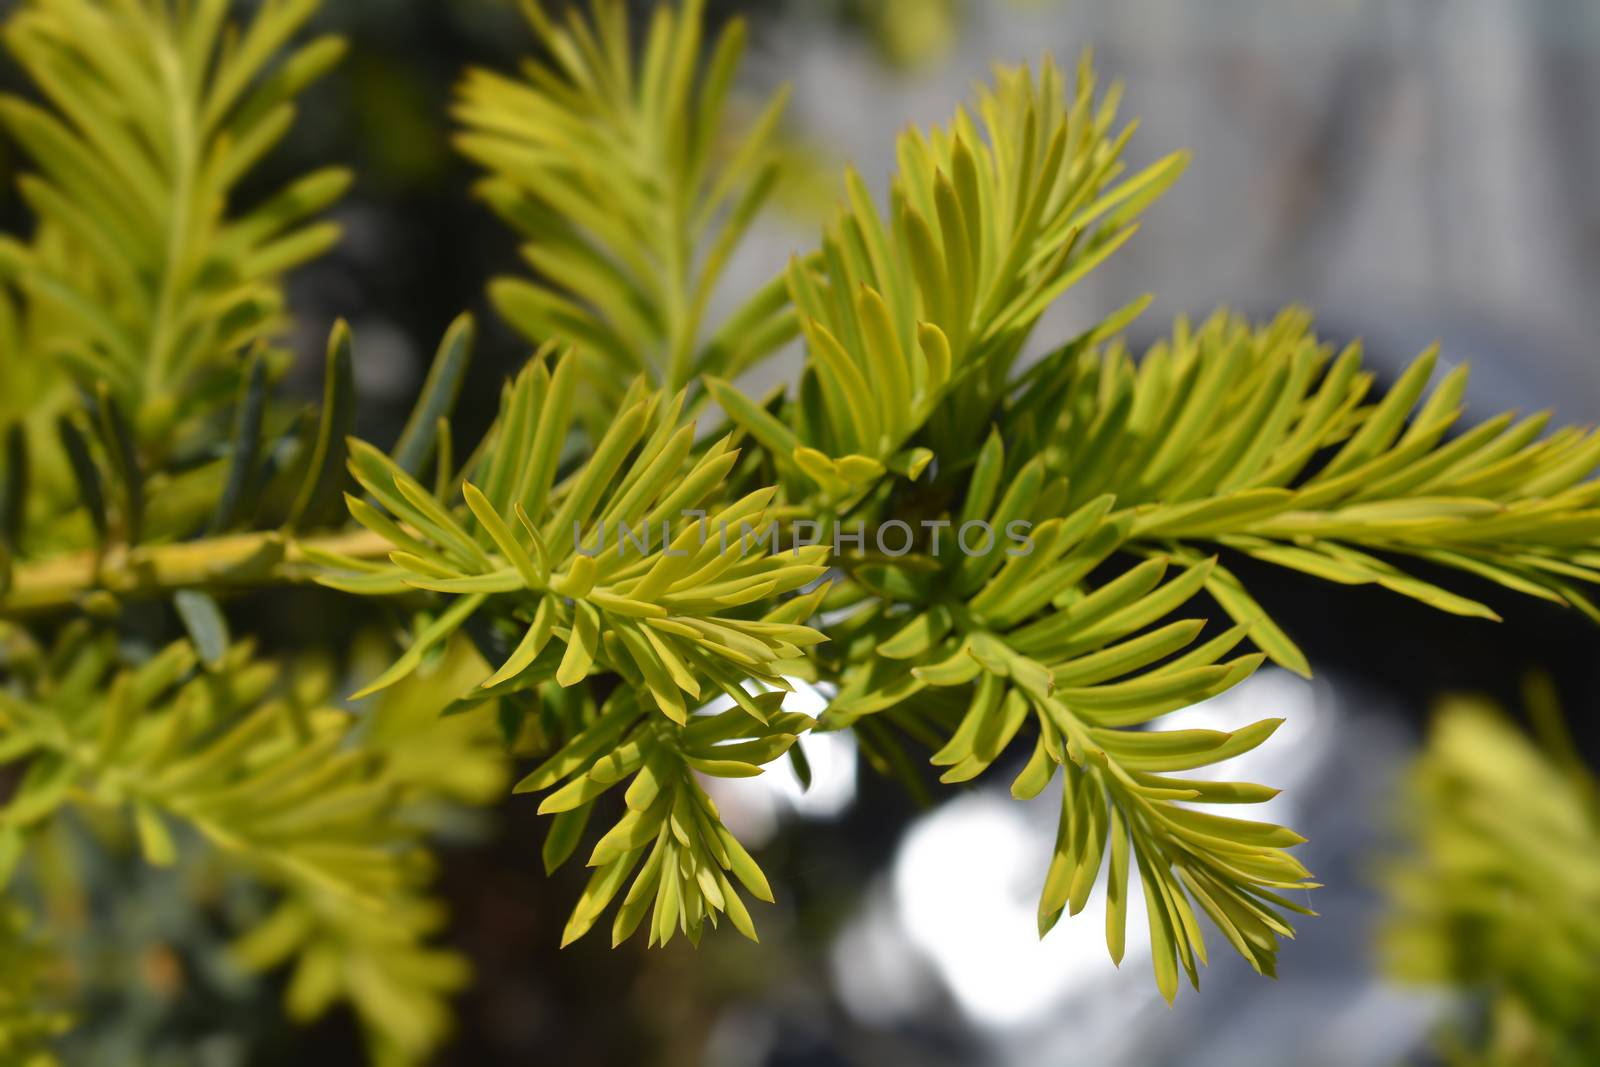 Golden English yew Summergold new leaves - Latin name - Taxus baccata Summergold